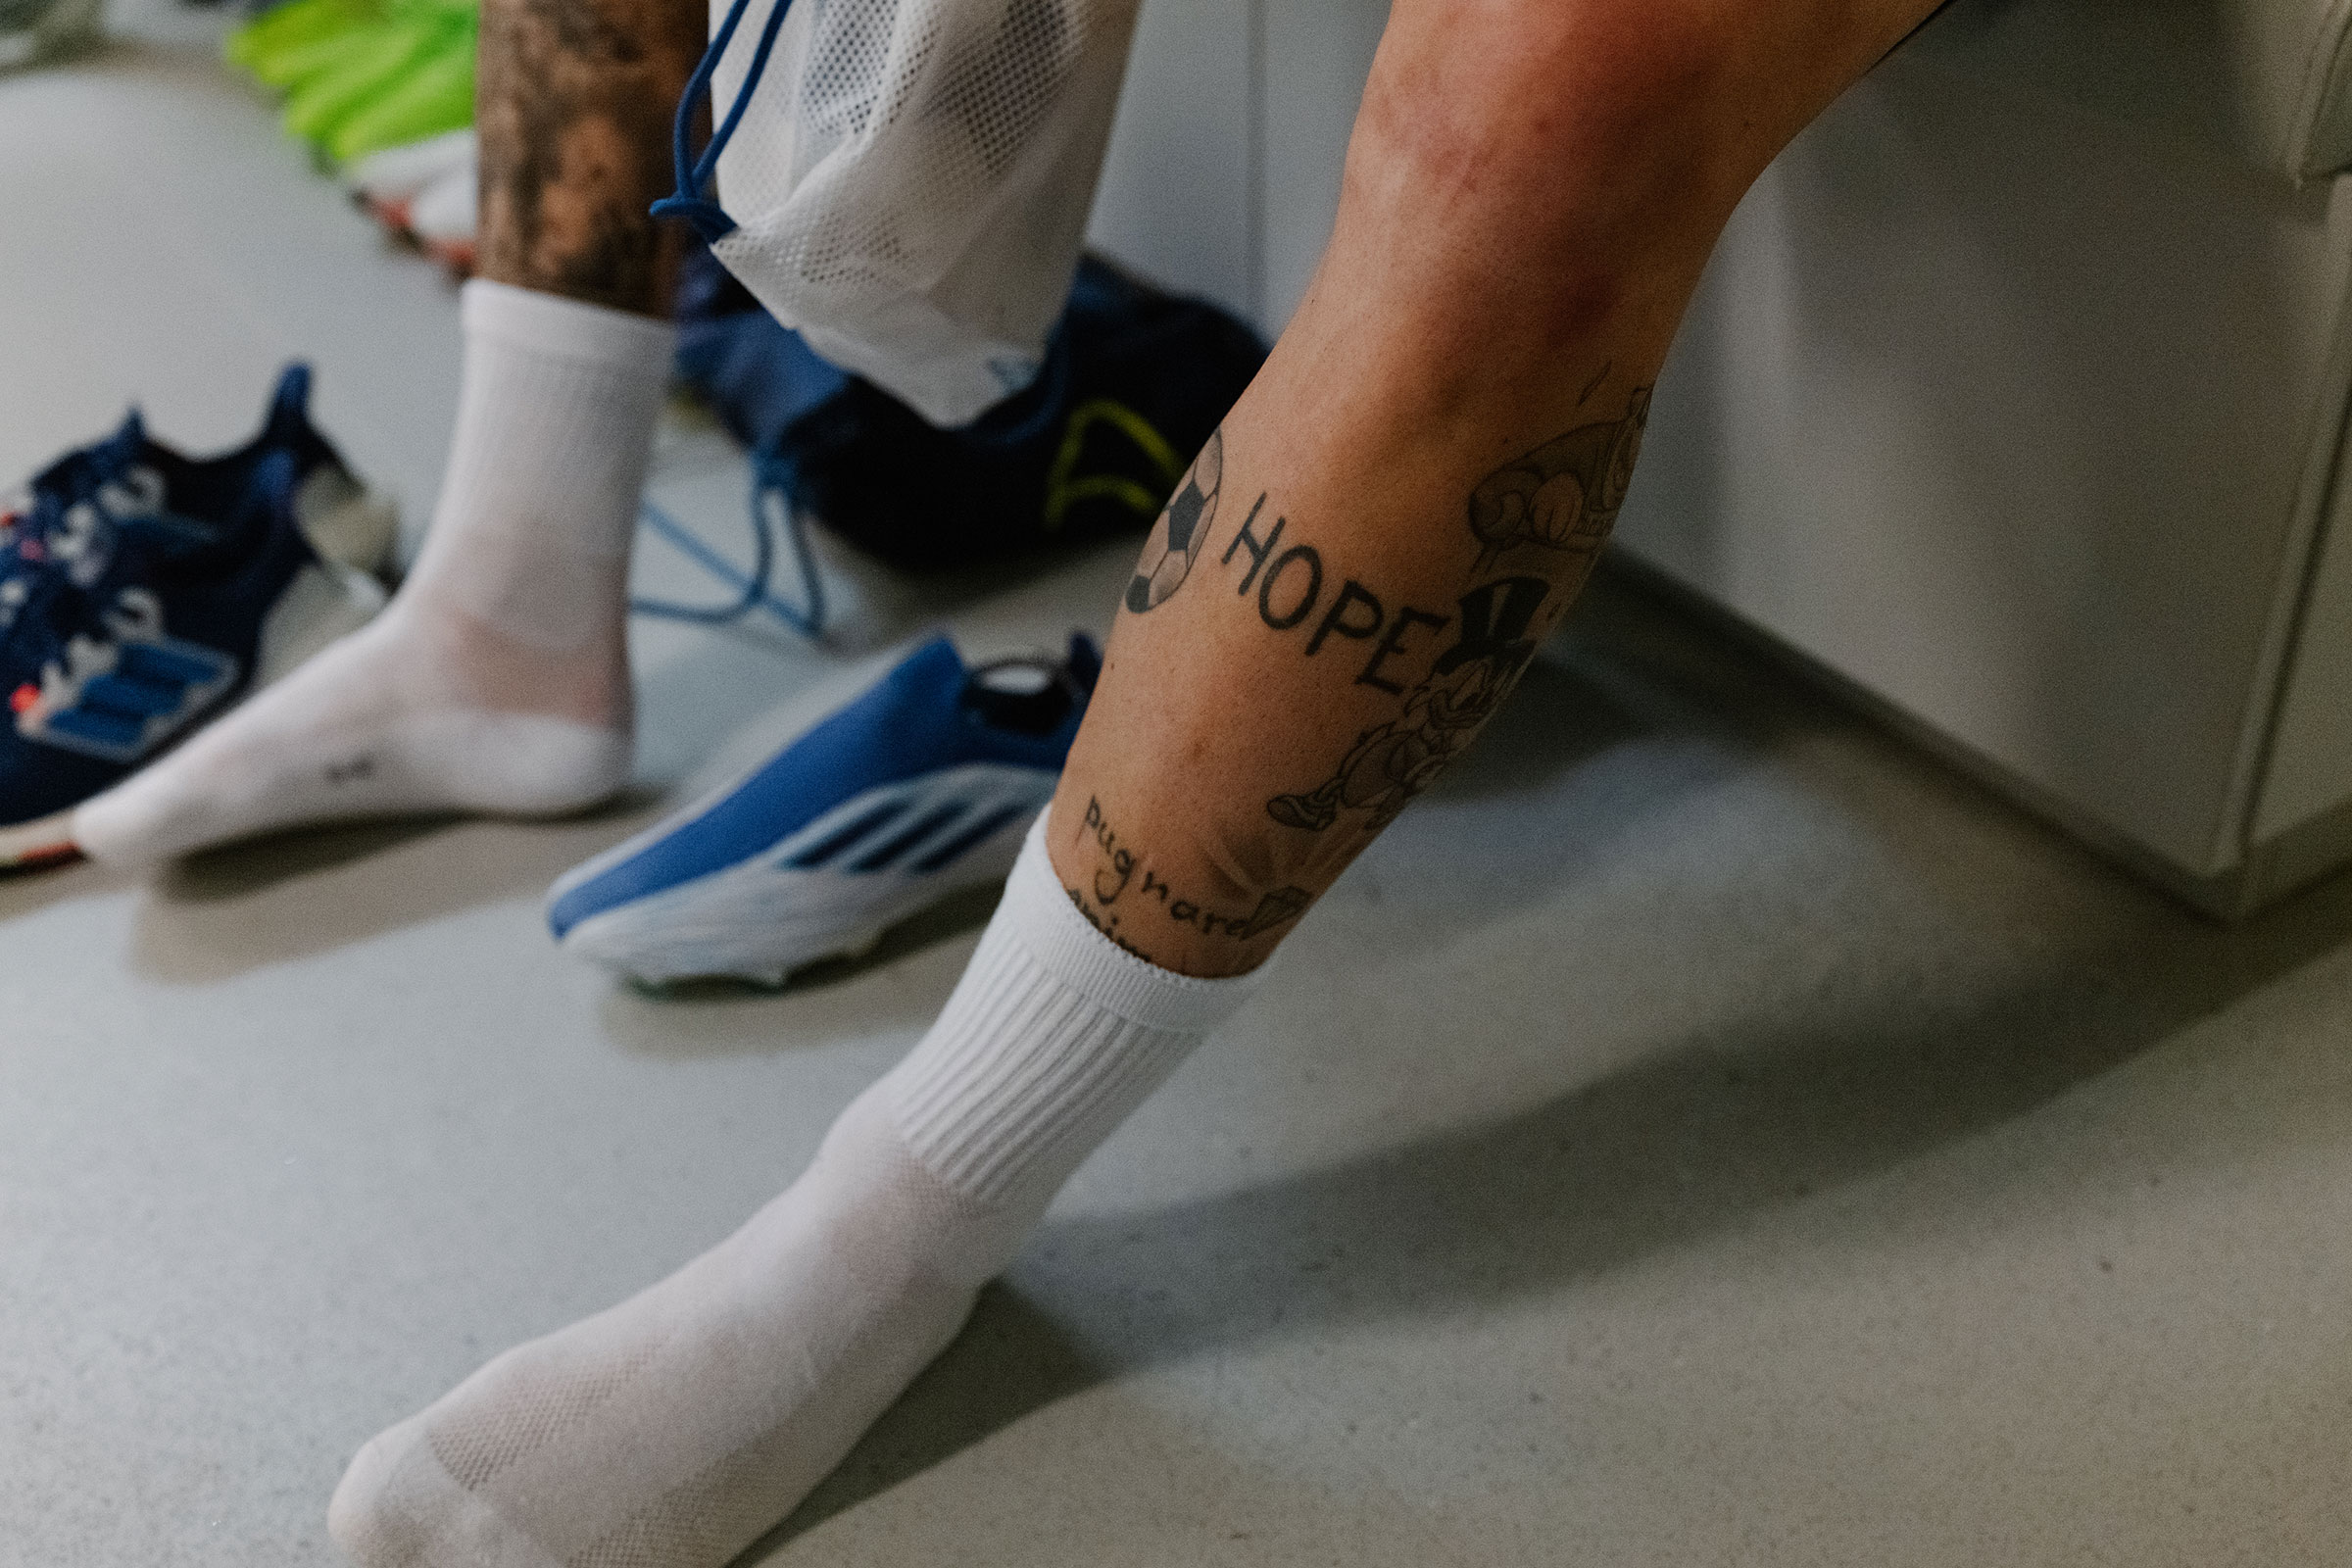 Mykola Shaparenko's "HOPE" tattoo (Ciril Jazbec for TIME)